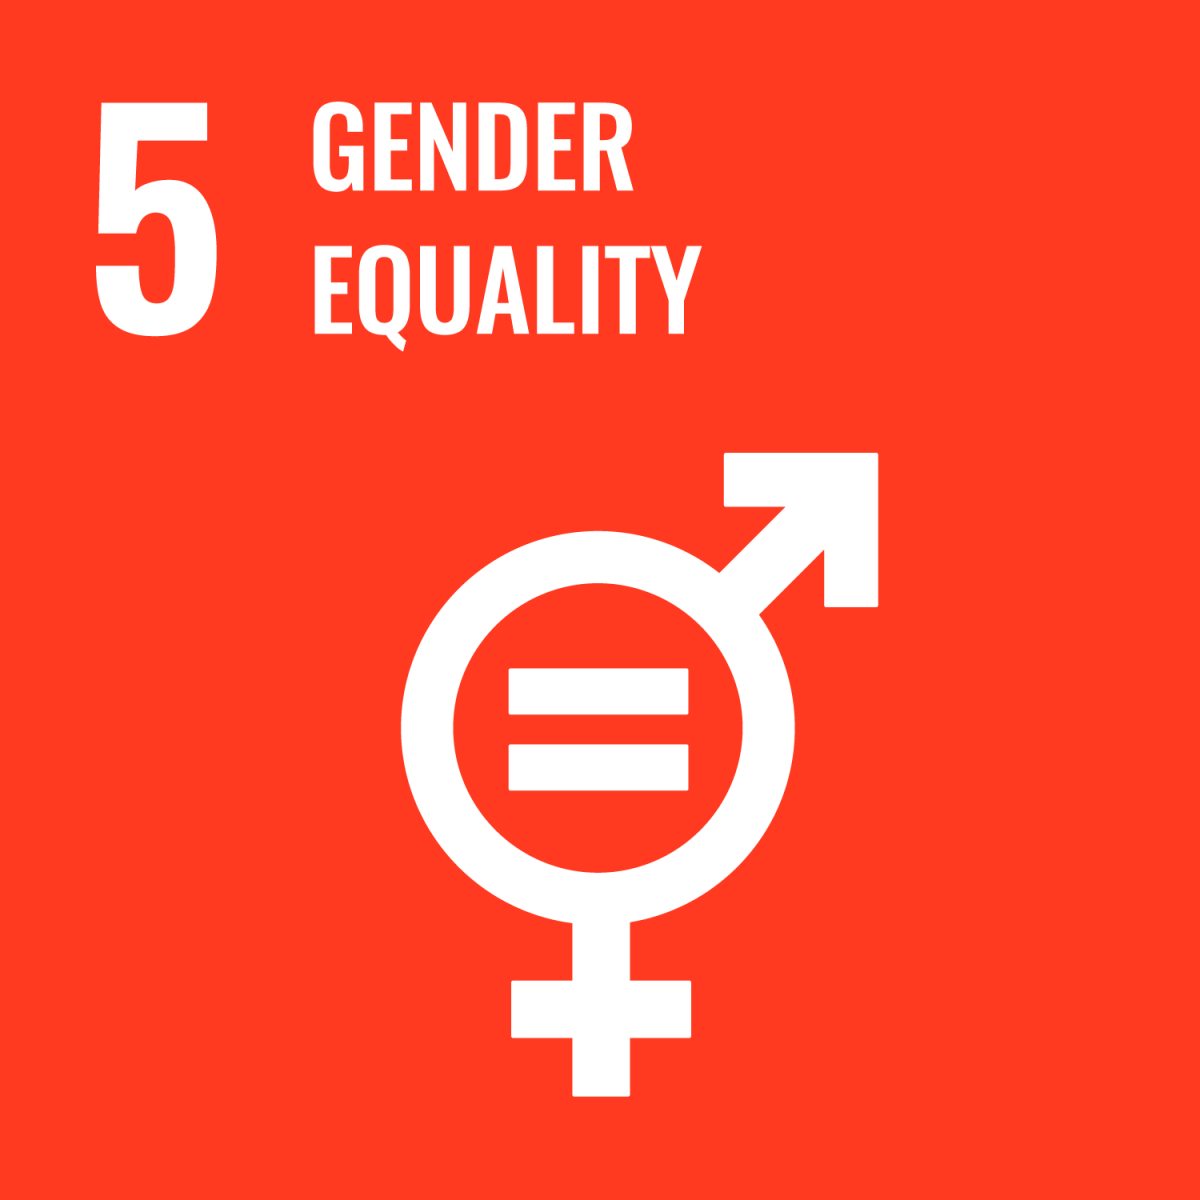 Shows UN SDG 5 - Gender Equality